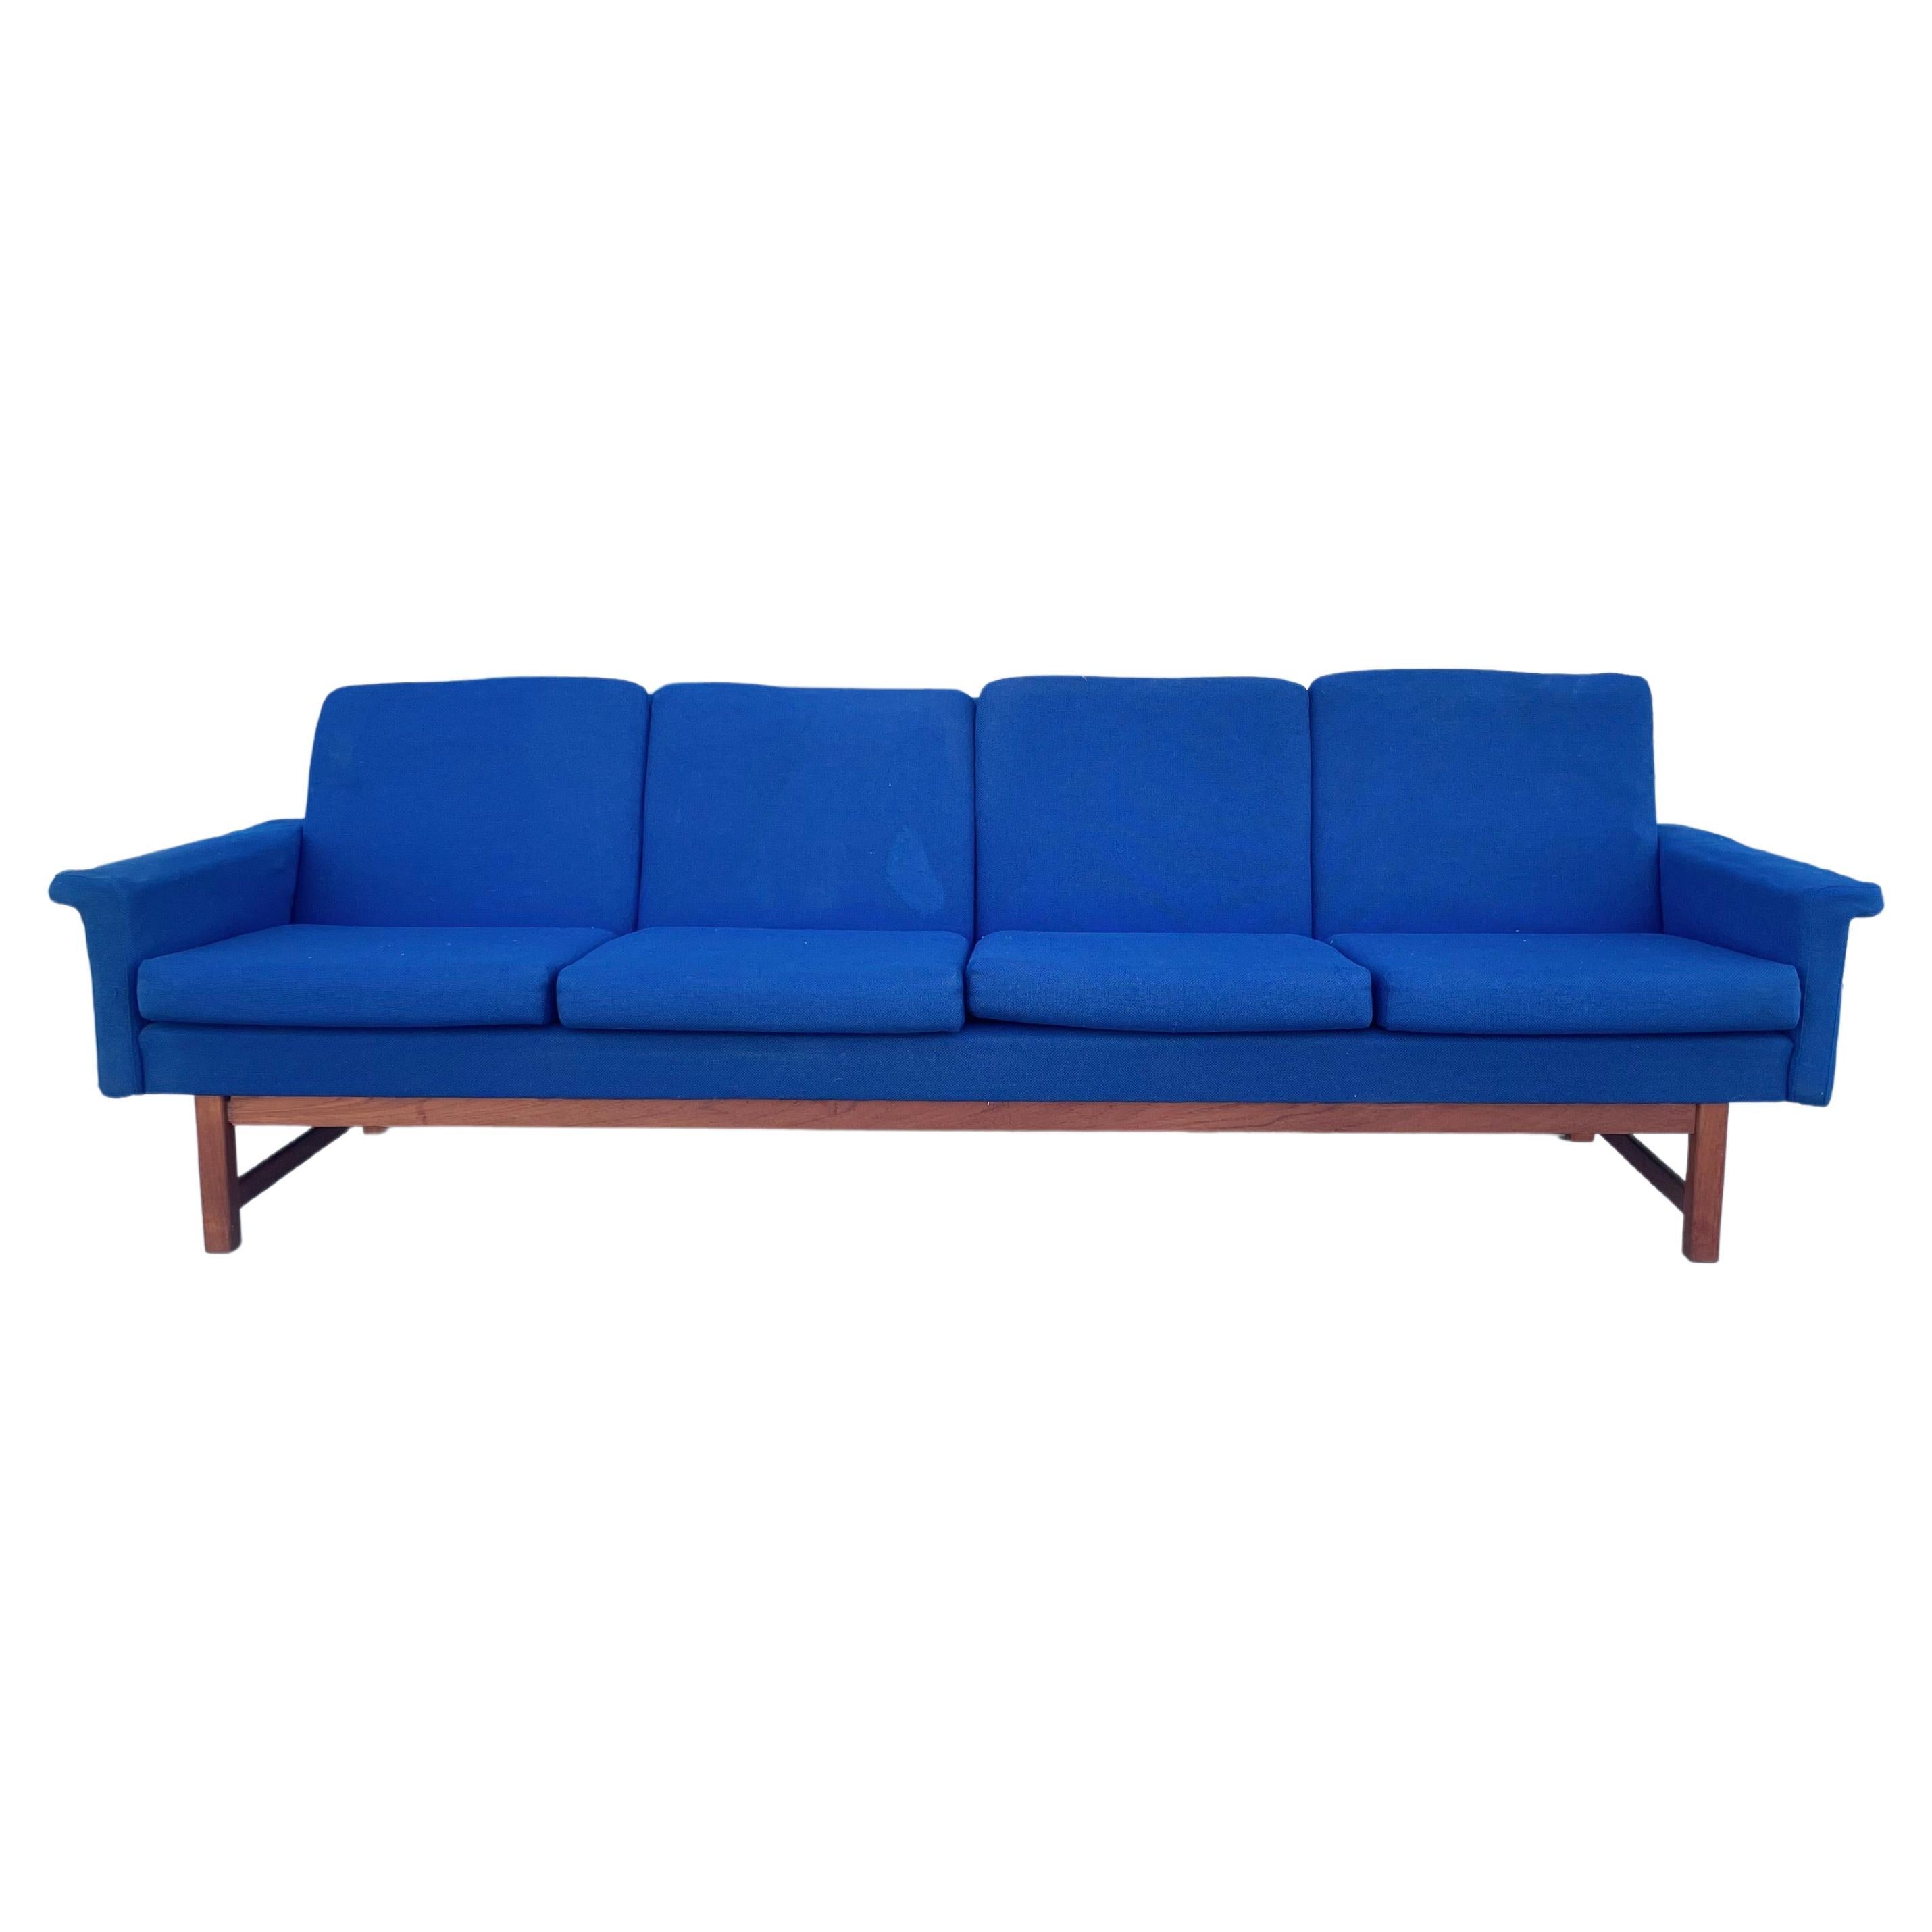 Danish Modern Teak Sofa For Sale